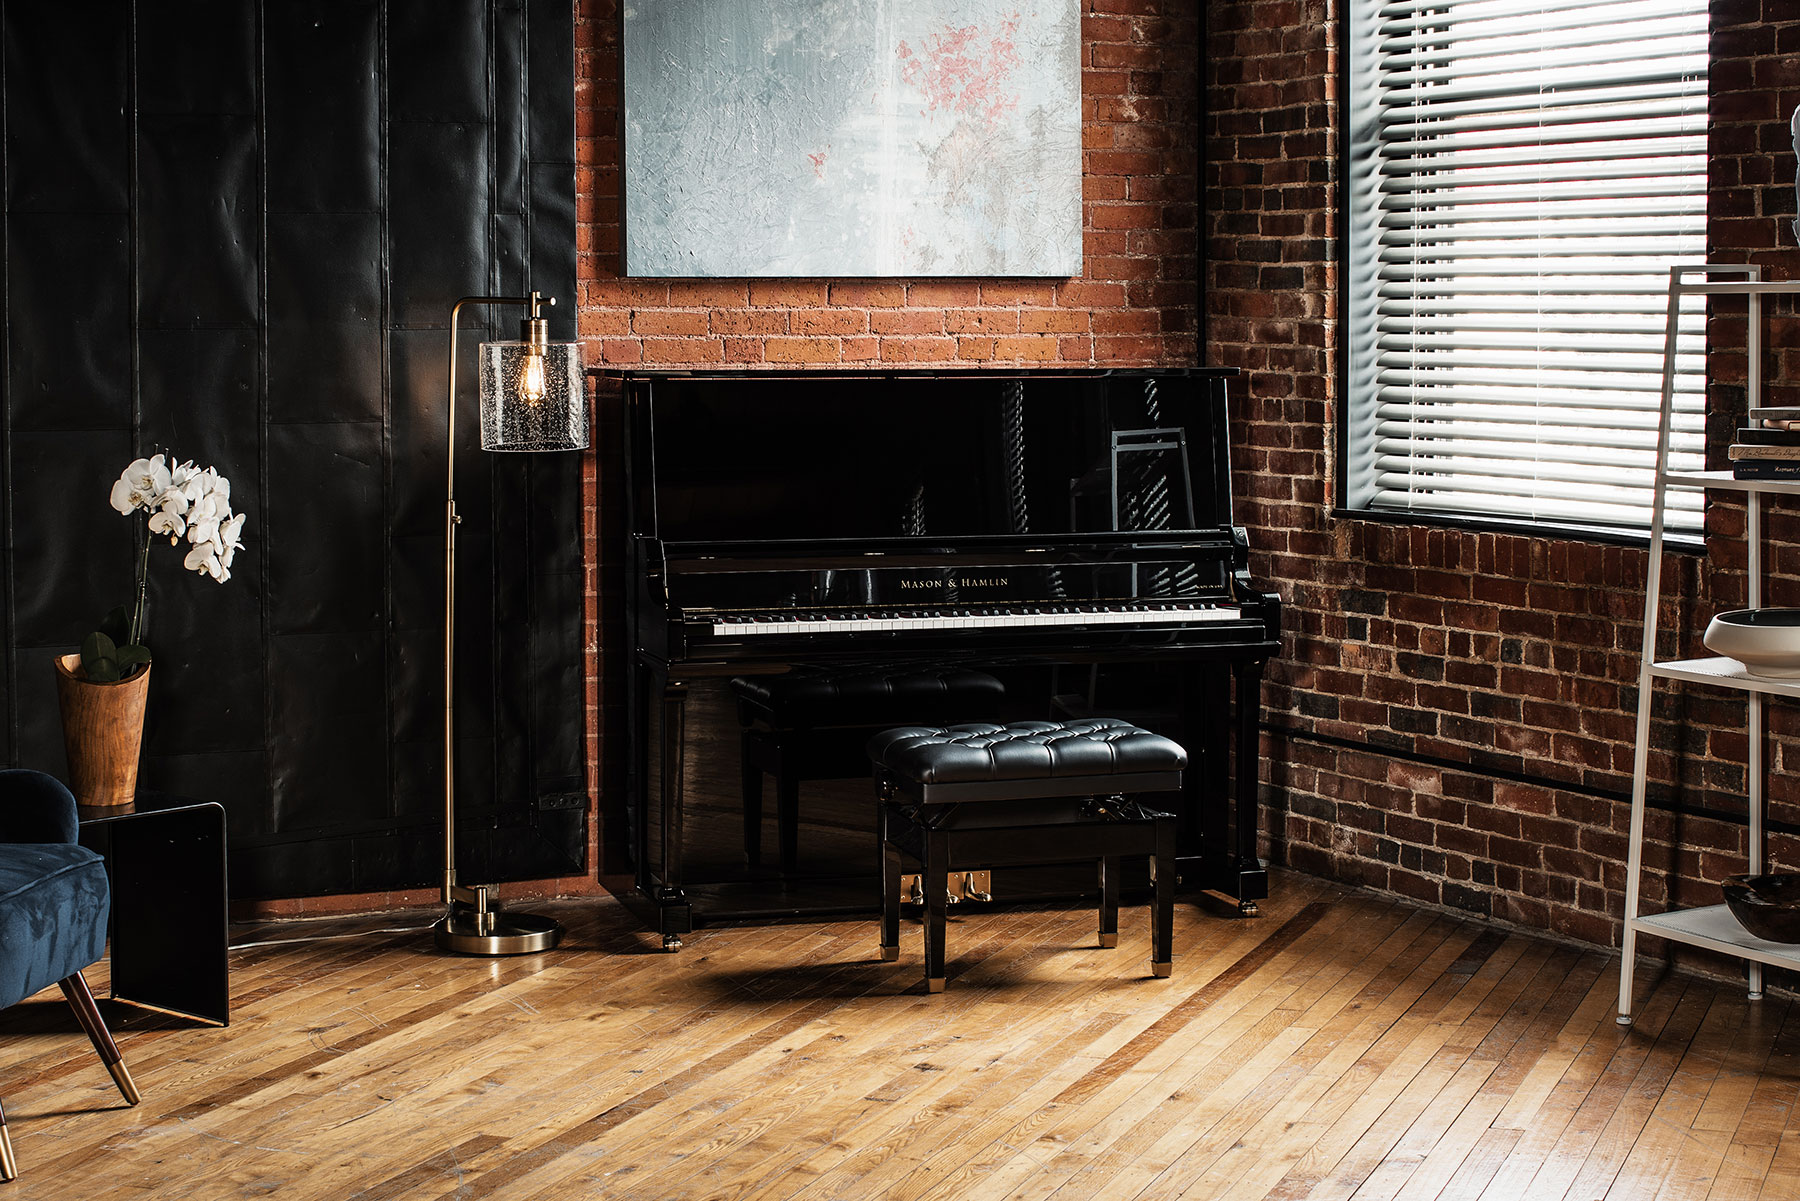 Mason & Hamlin upright piano in  vintage apartment